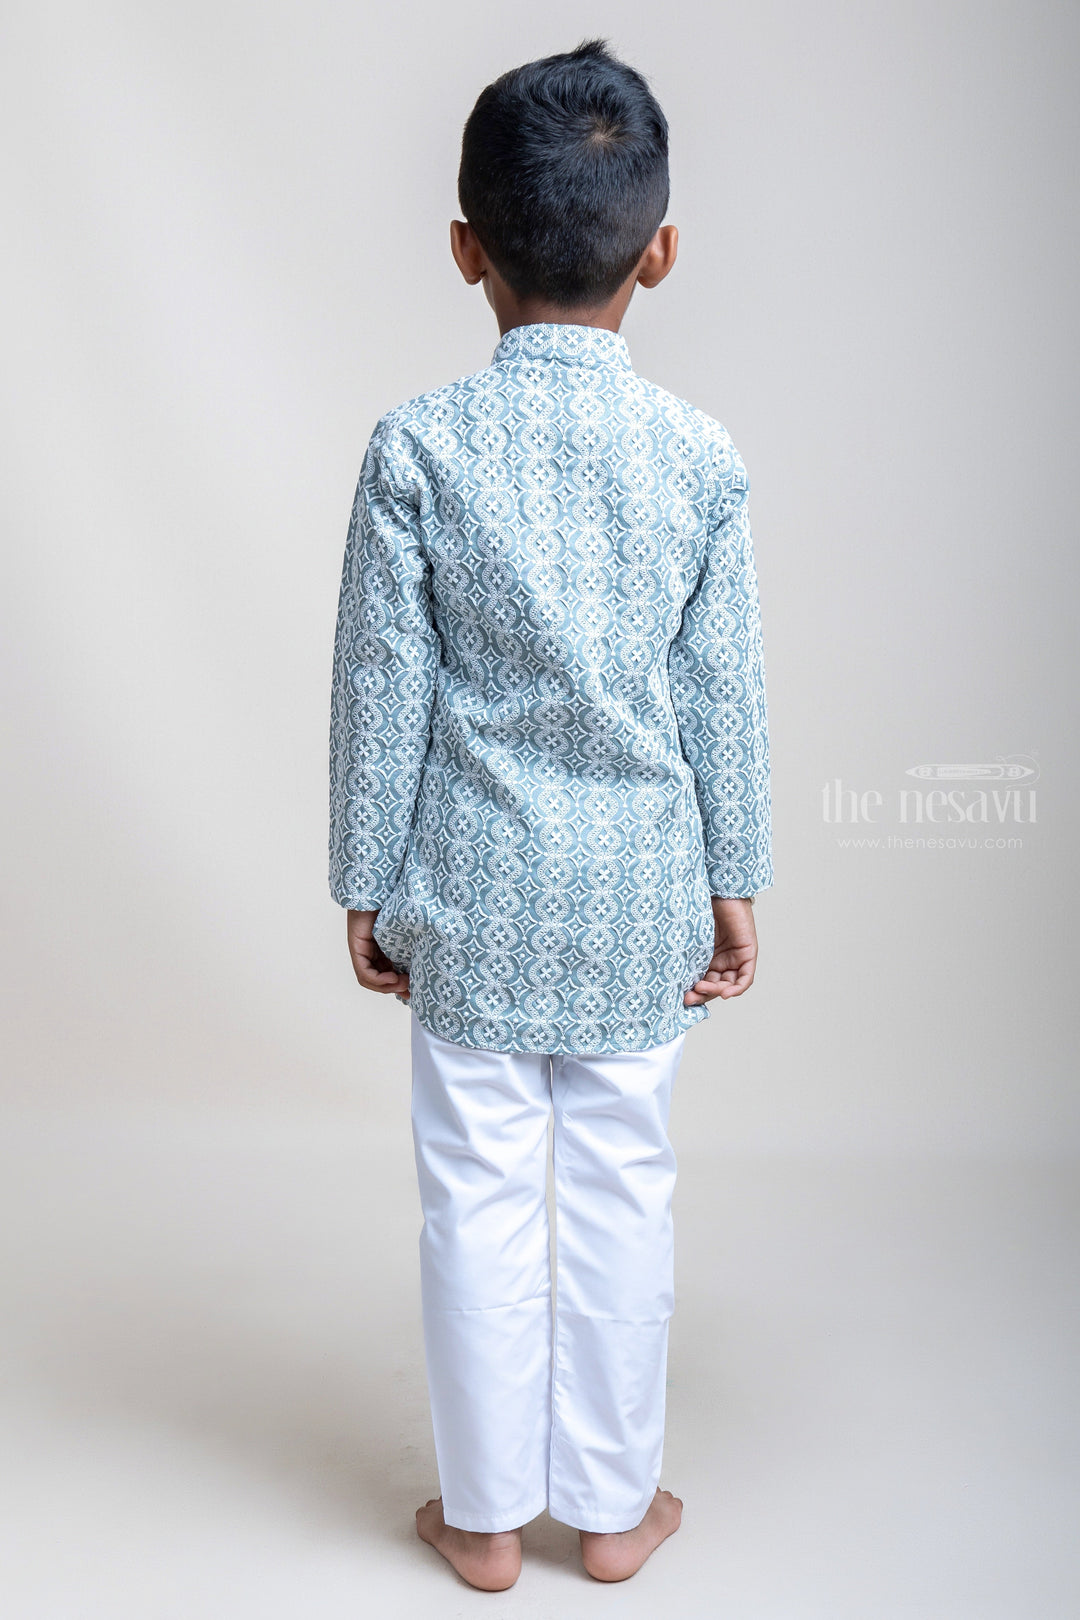 The Nesavu Boys Kurtha Set Designer Embroidery Full Hand Blue Kurta And White Pants For Baby Boys psr silks Nesavu